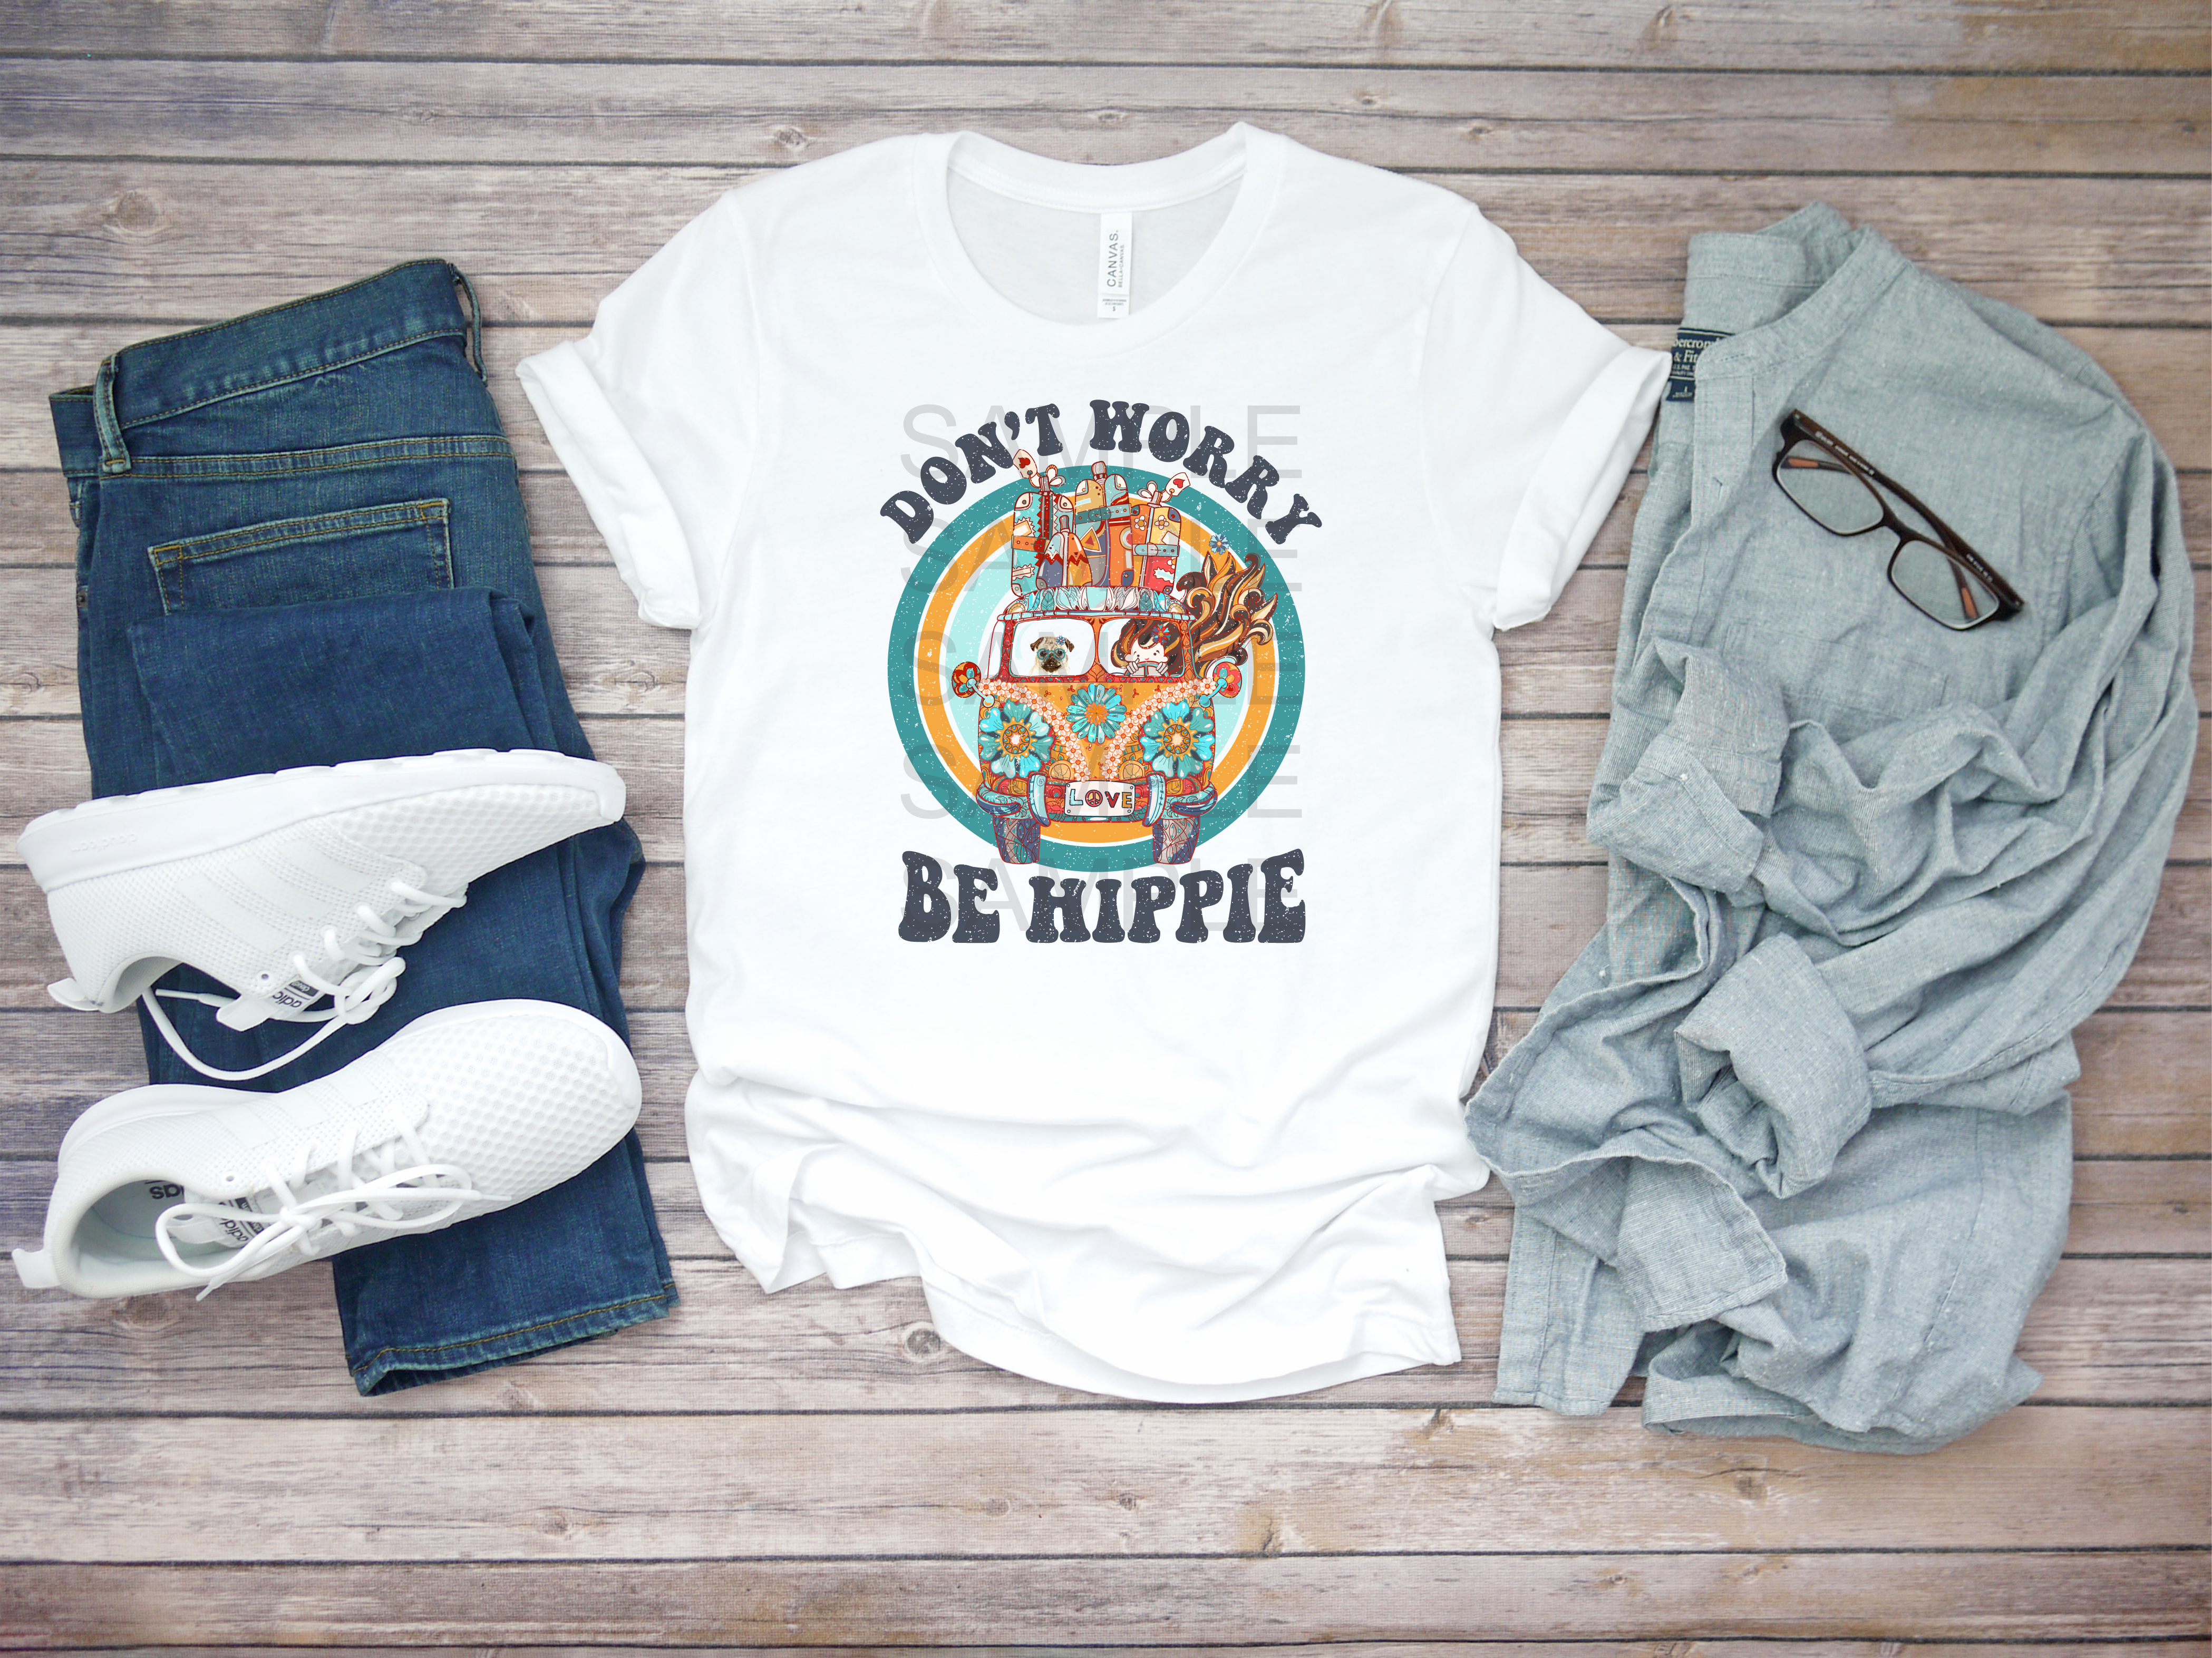 Don't Worry Be Hippie!  Wholesale Boho Clothing